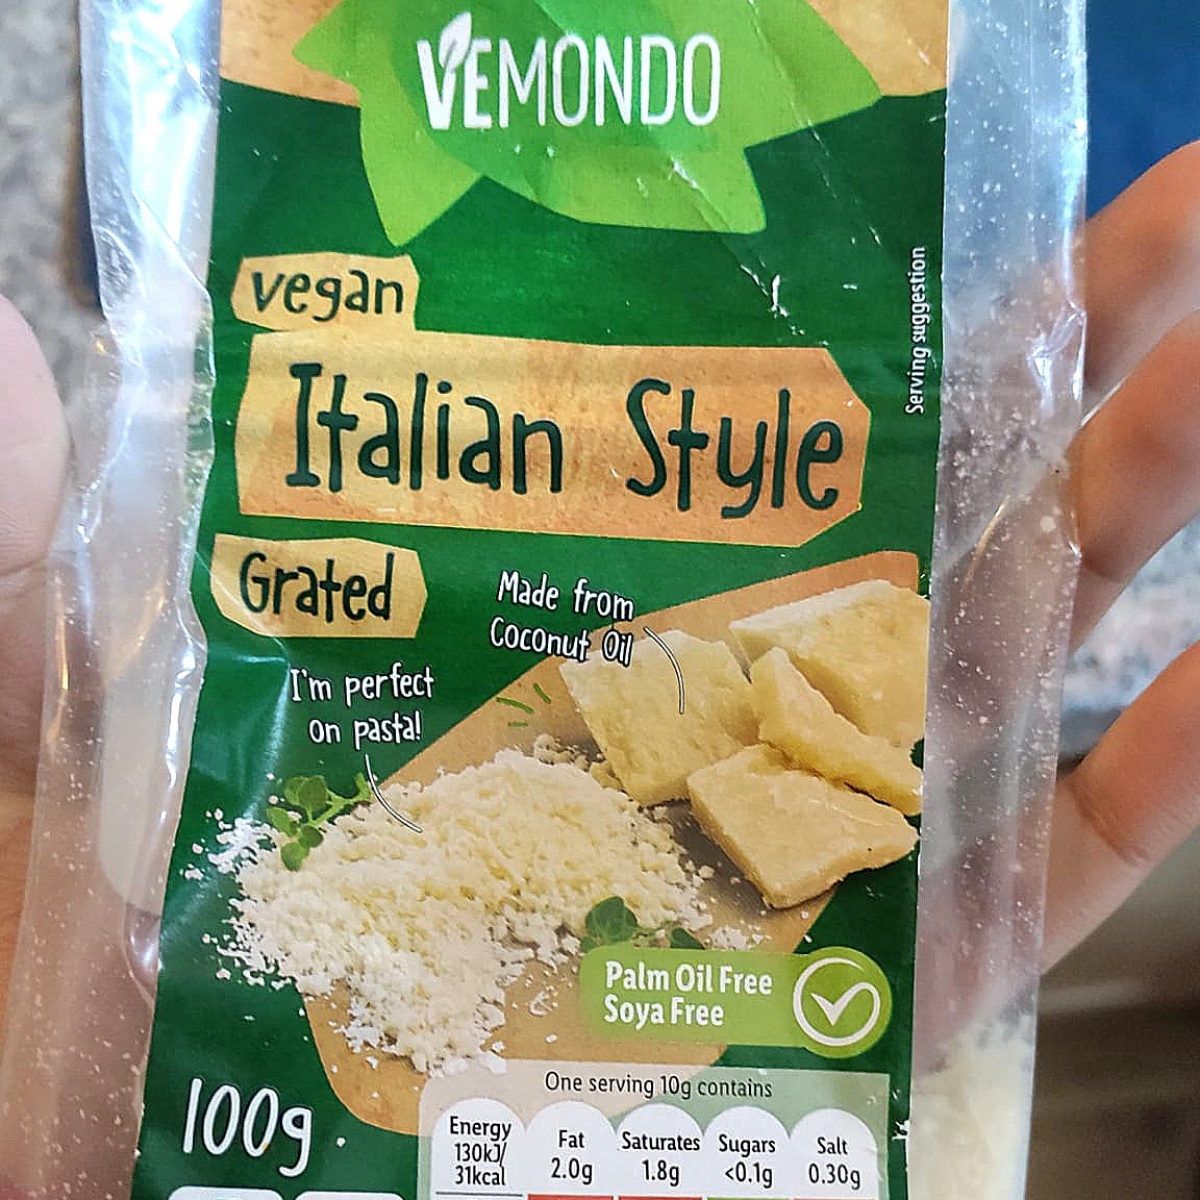 Vemondo parmesan cheese Review | abillion